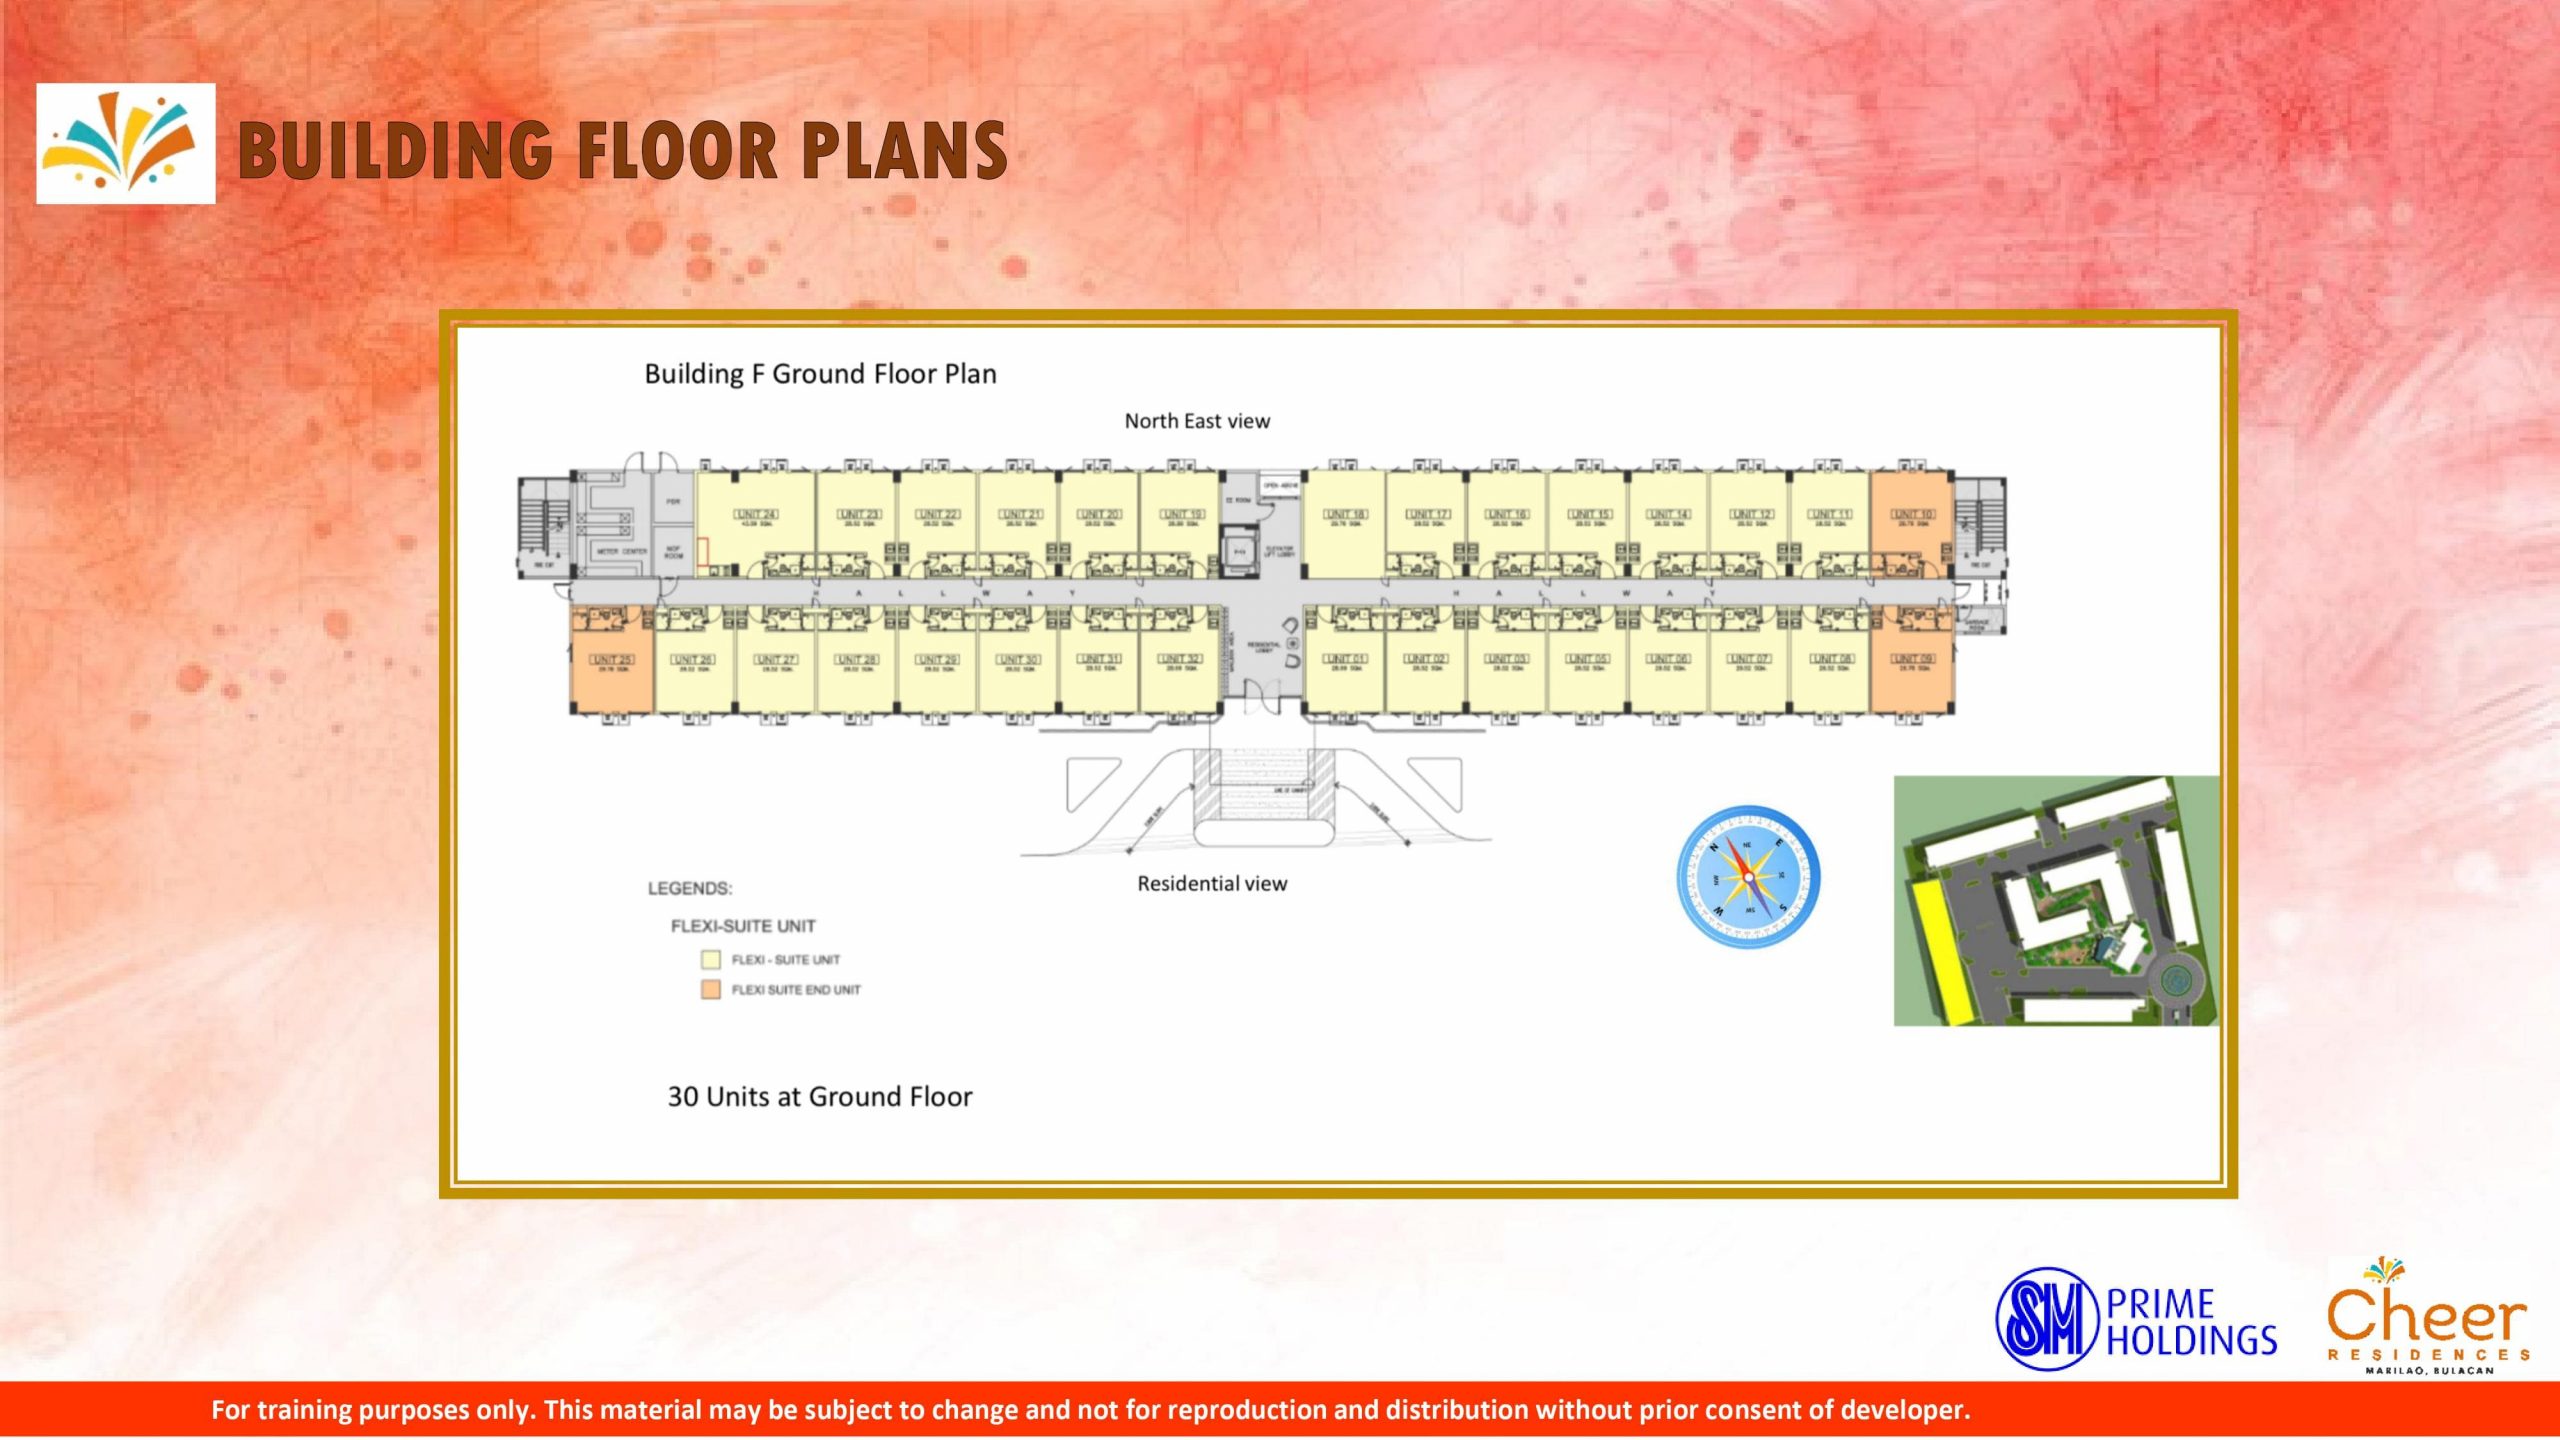 Building F Ground Floor Plan